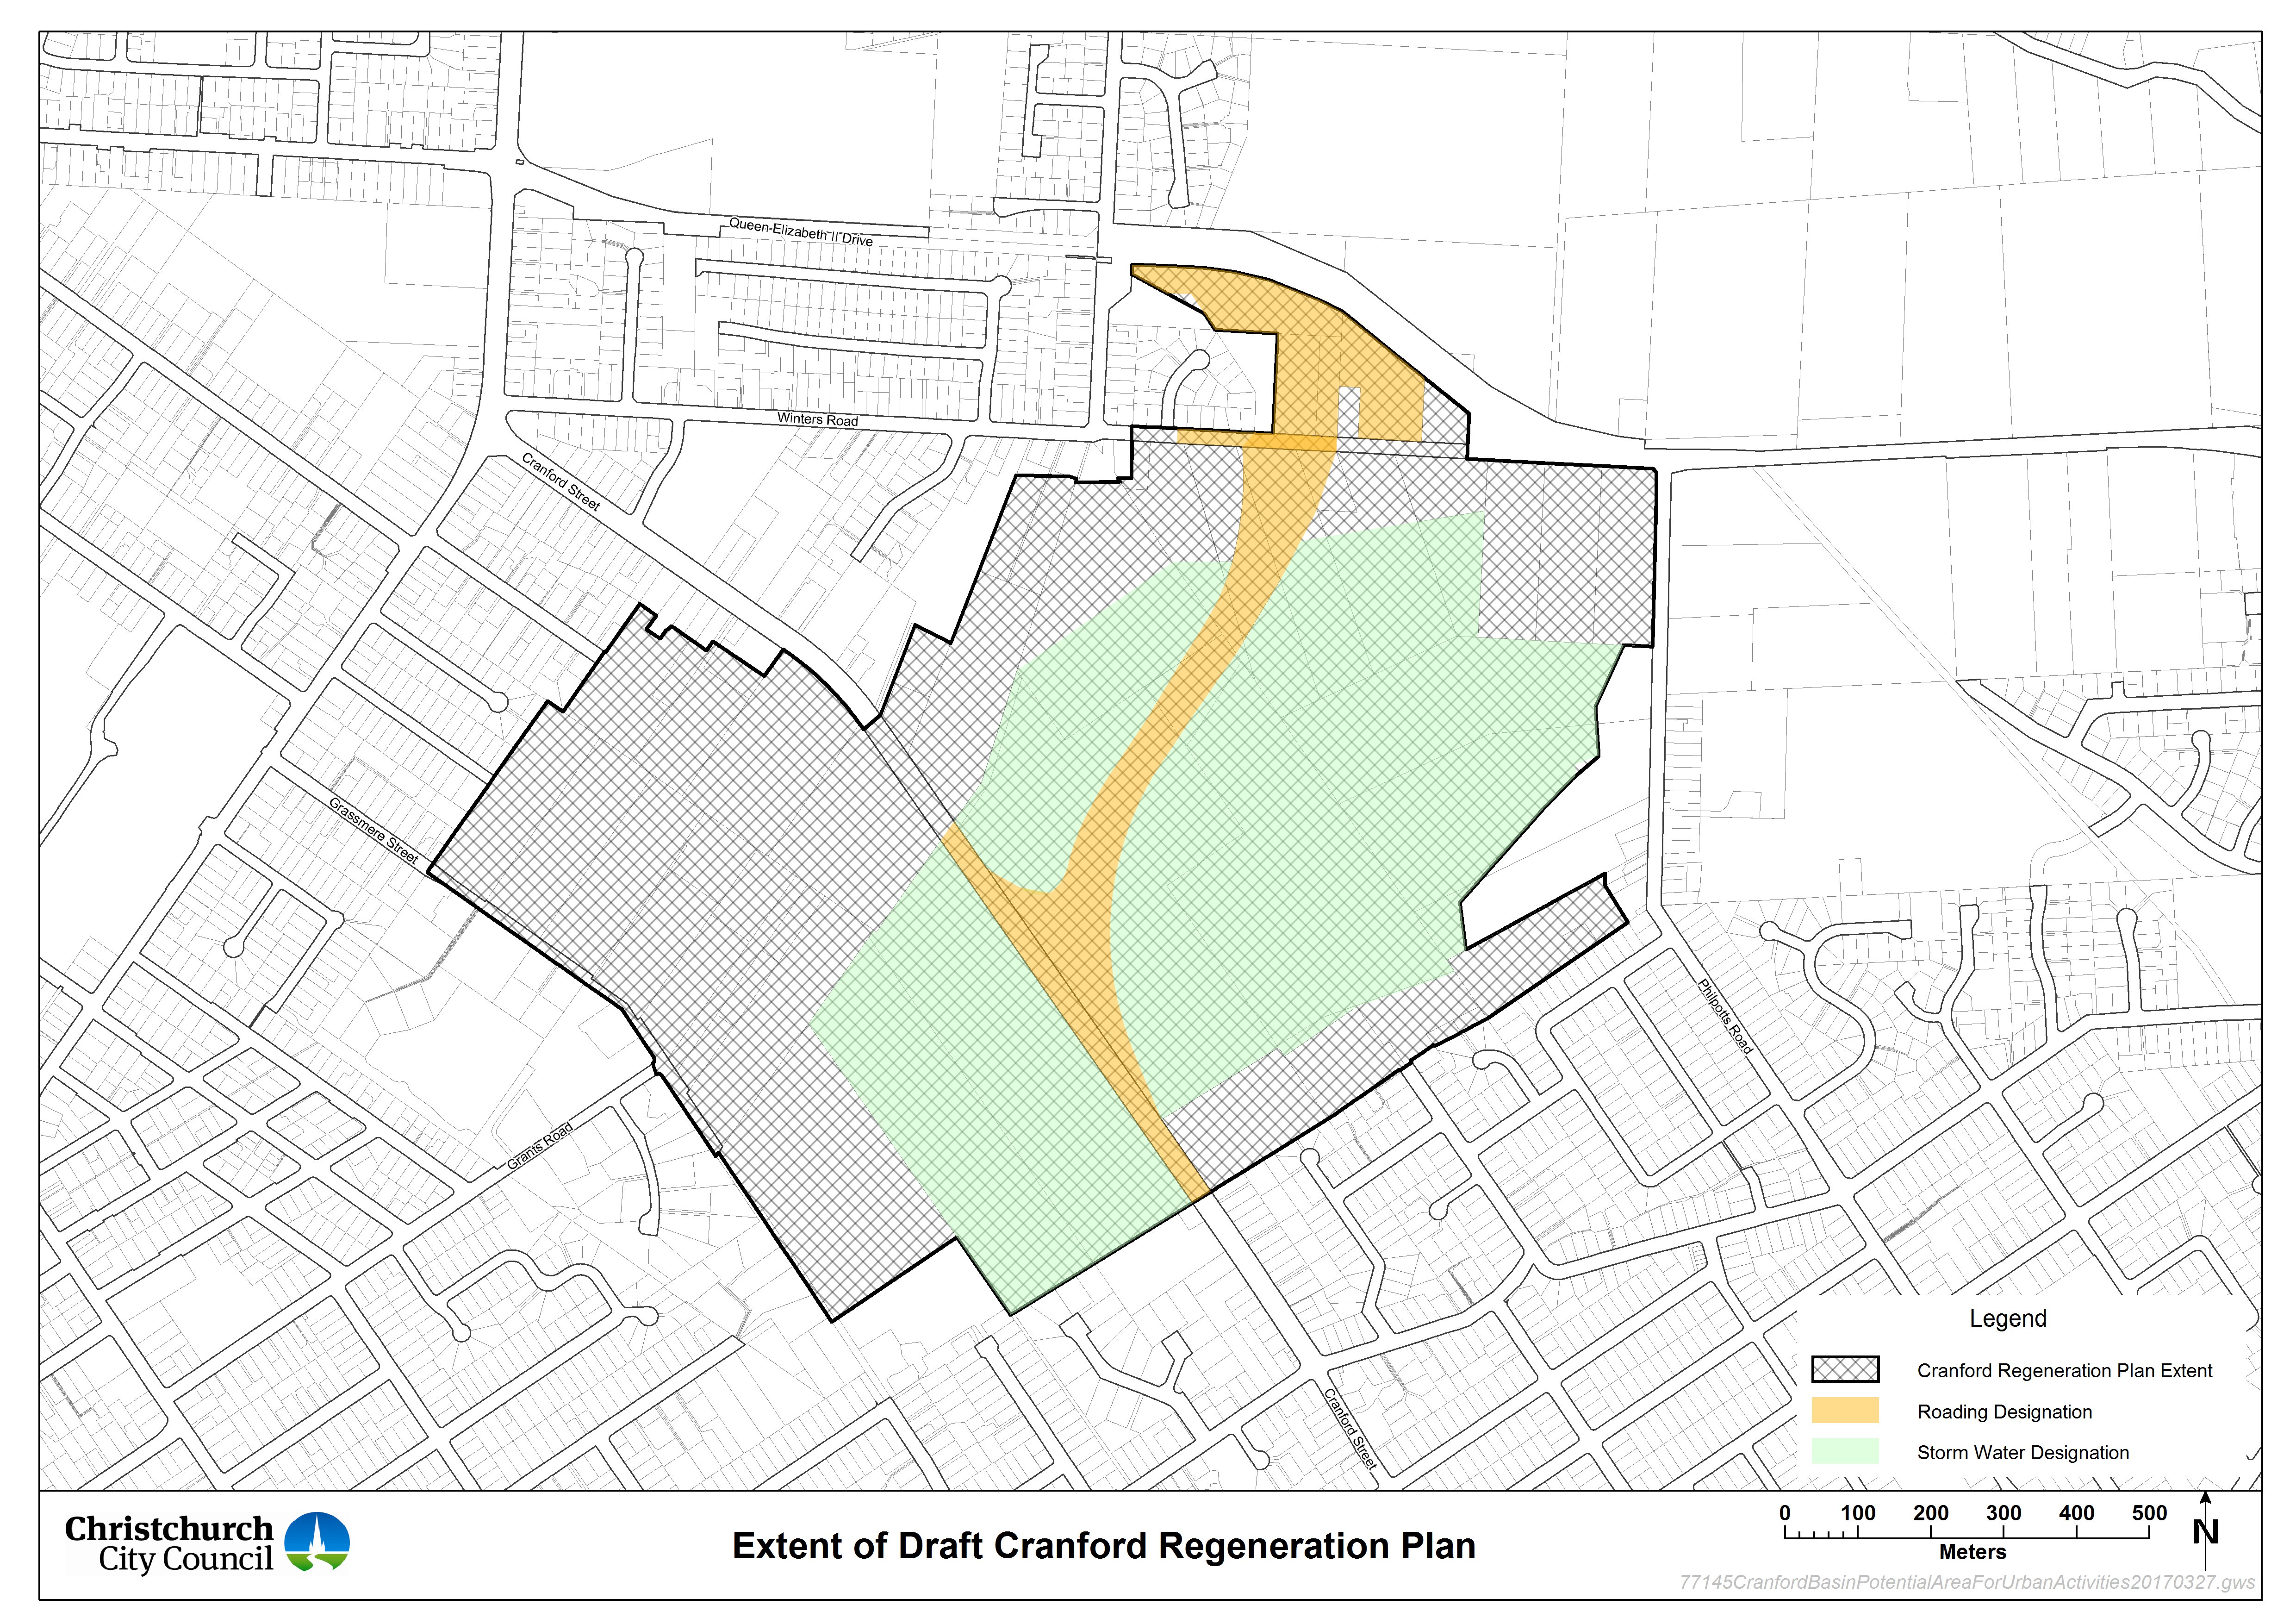 Extent of the Draft Cranford Regeneration Plan